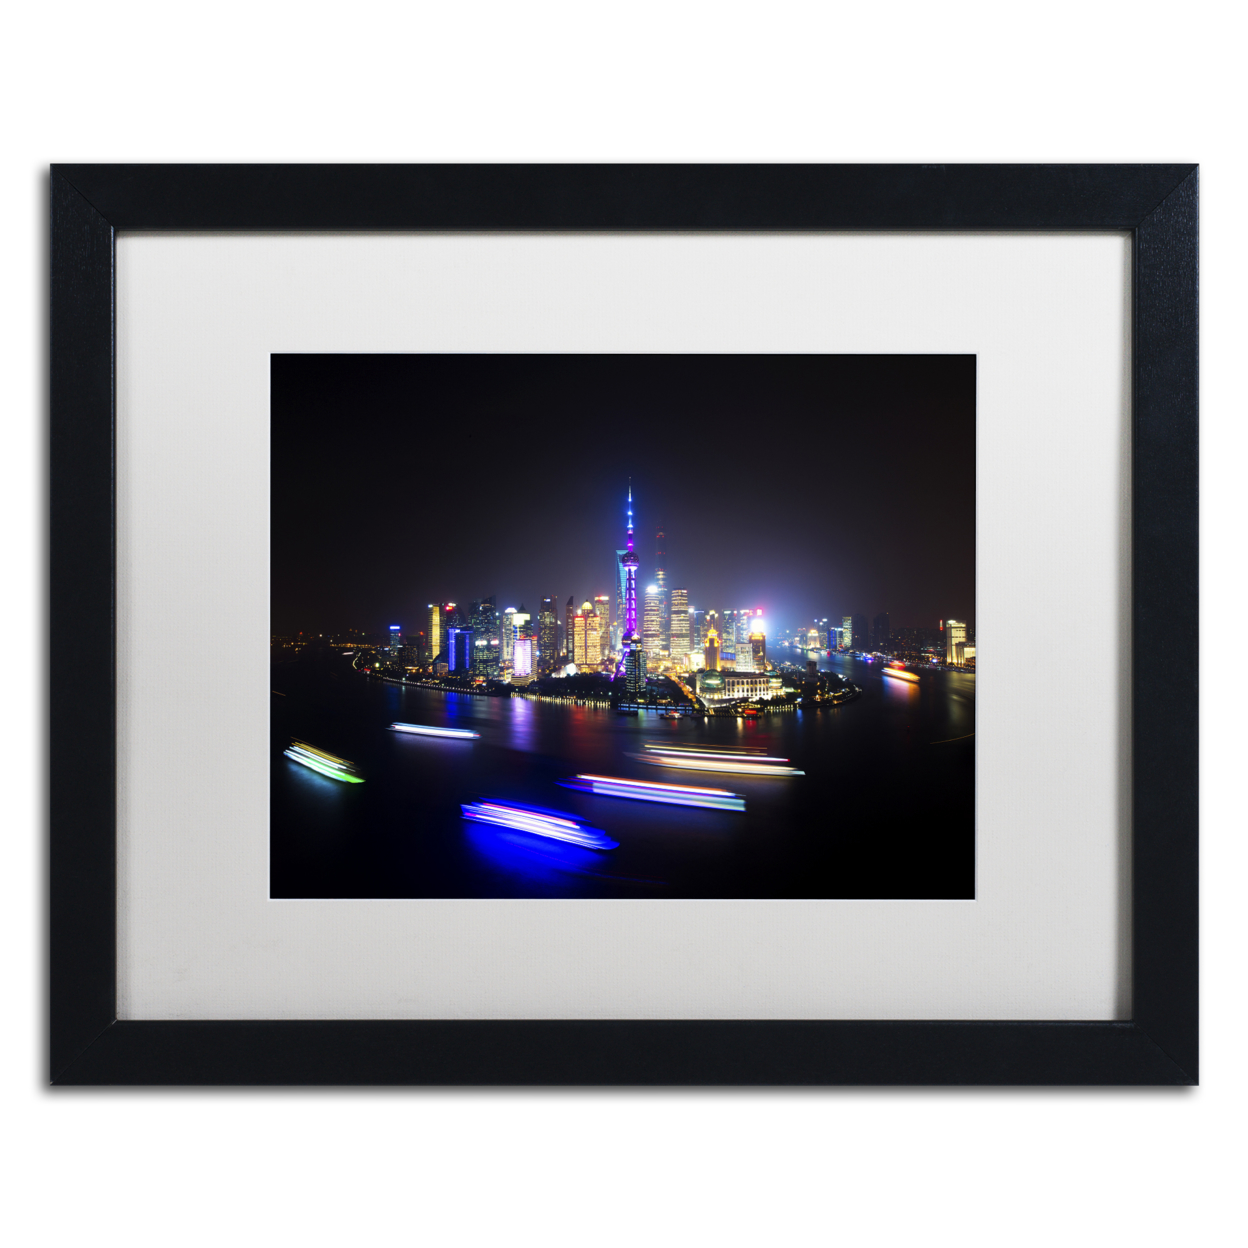 Philippe Hugonnard 'City Skyline' Black Wooden Framed Art 18 X 22 Inches